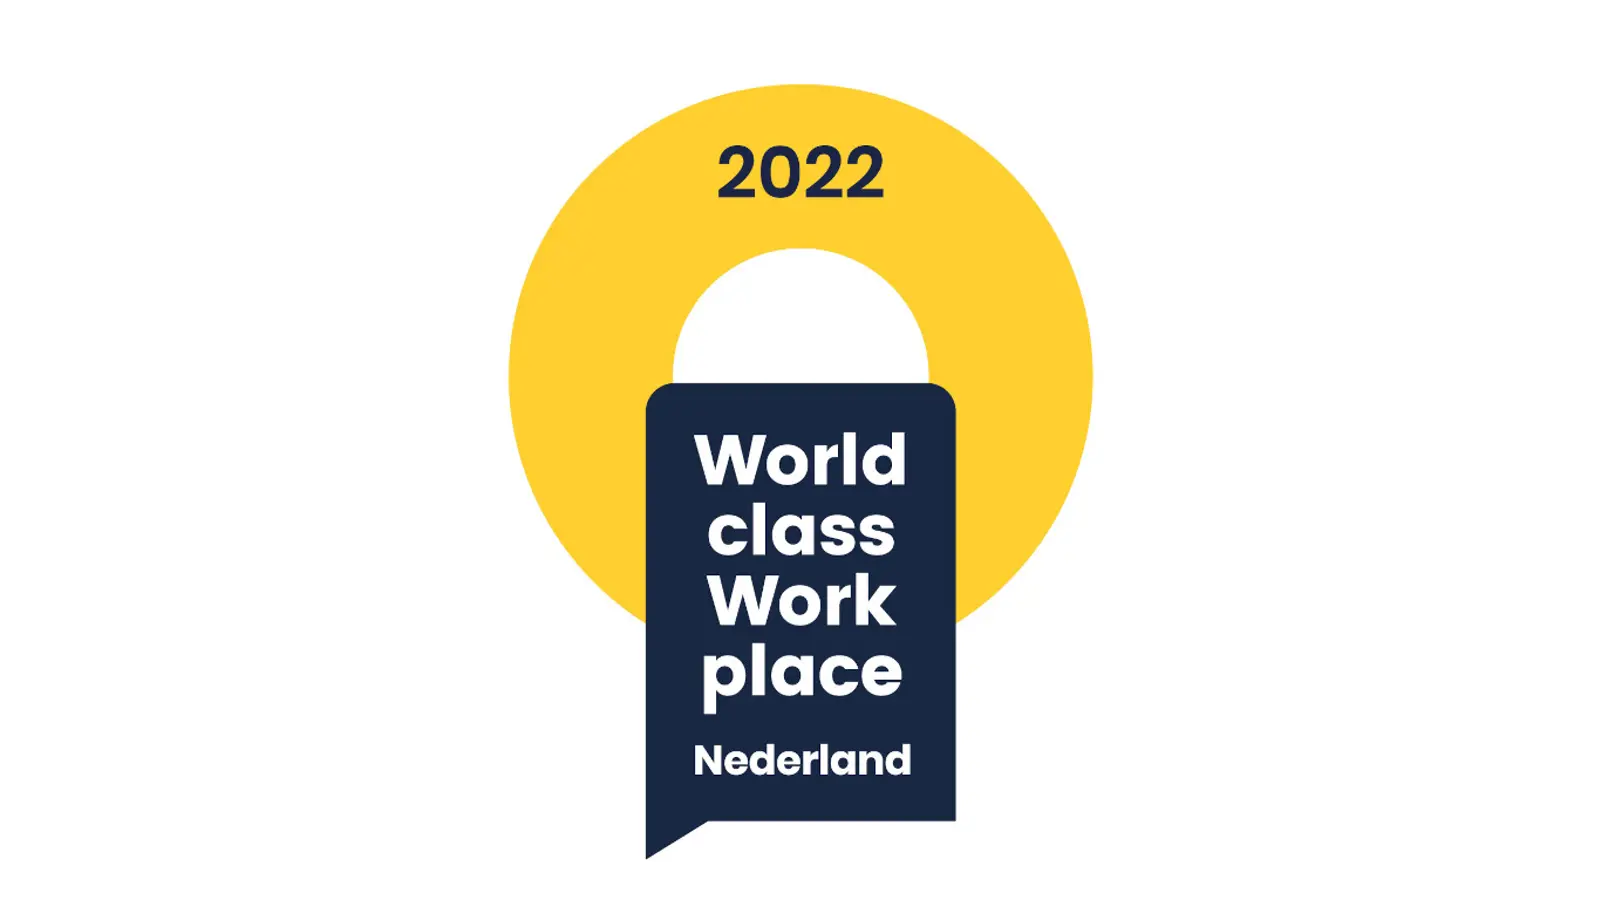 World Class Workplace 2022